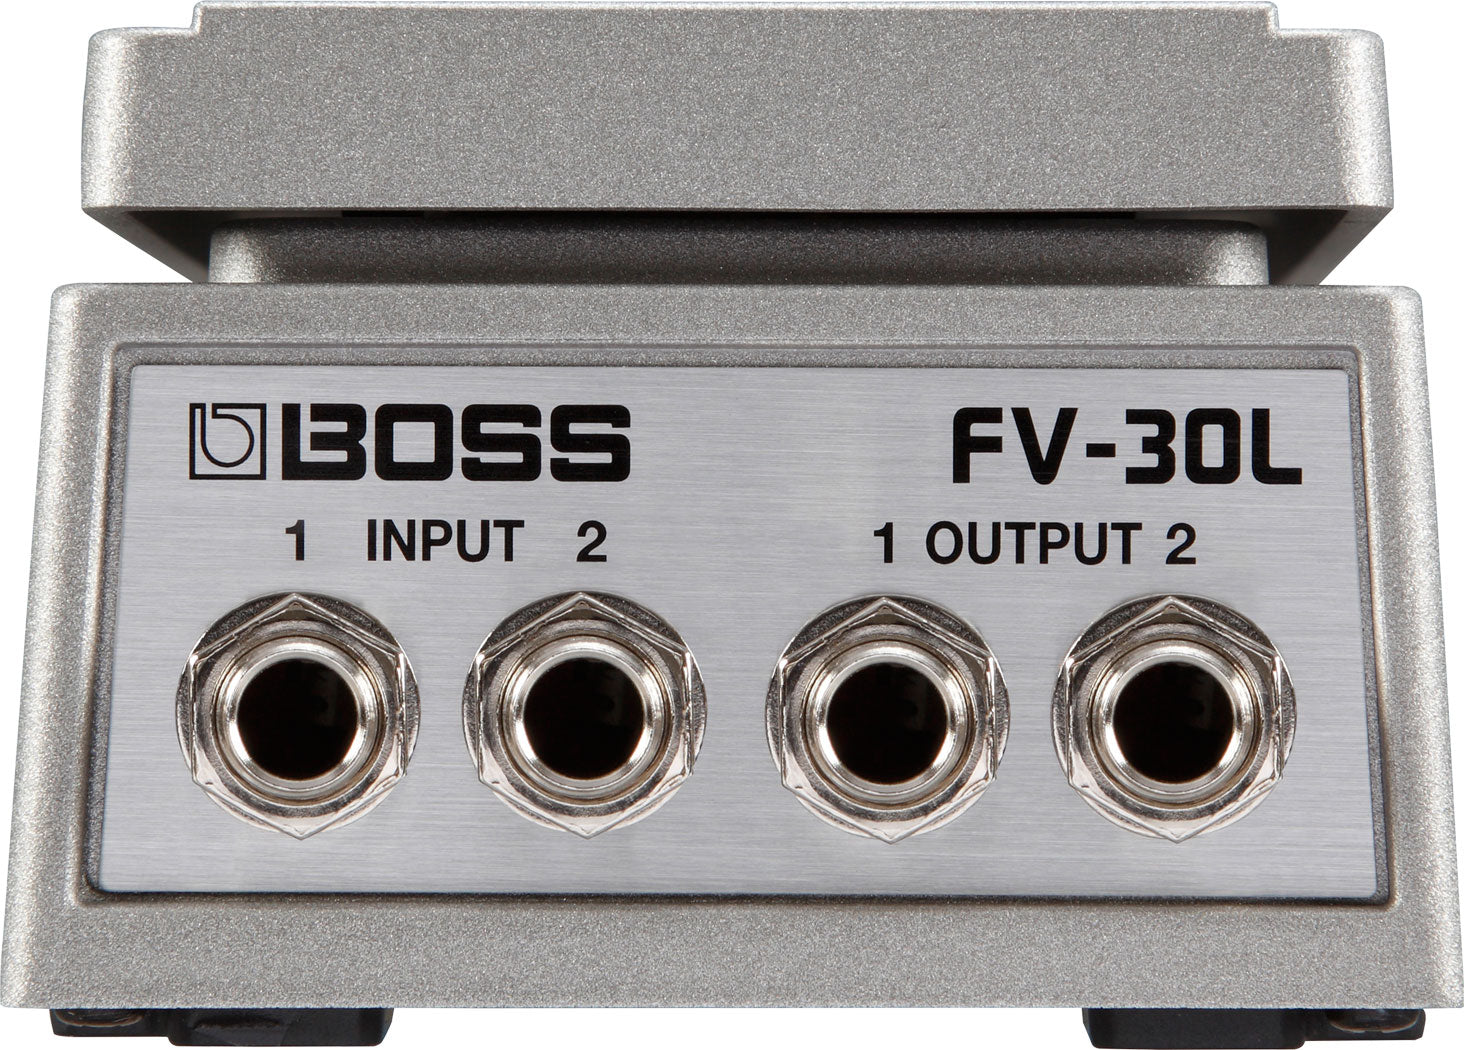 BOSS FV-30L Foot Volume (Low-impedance) 音量控制腳踏